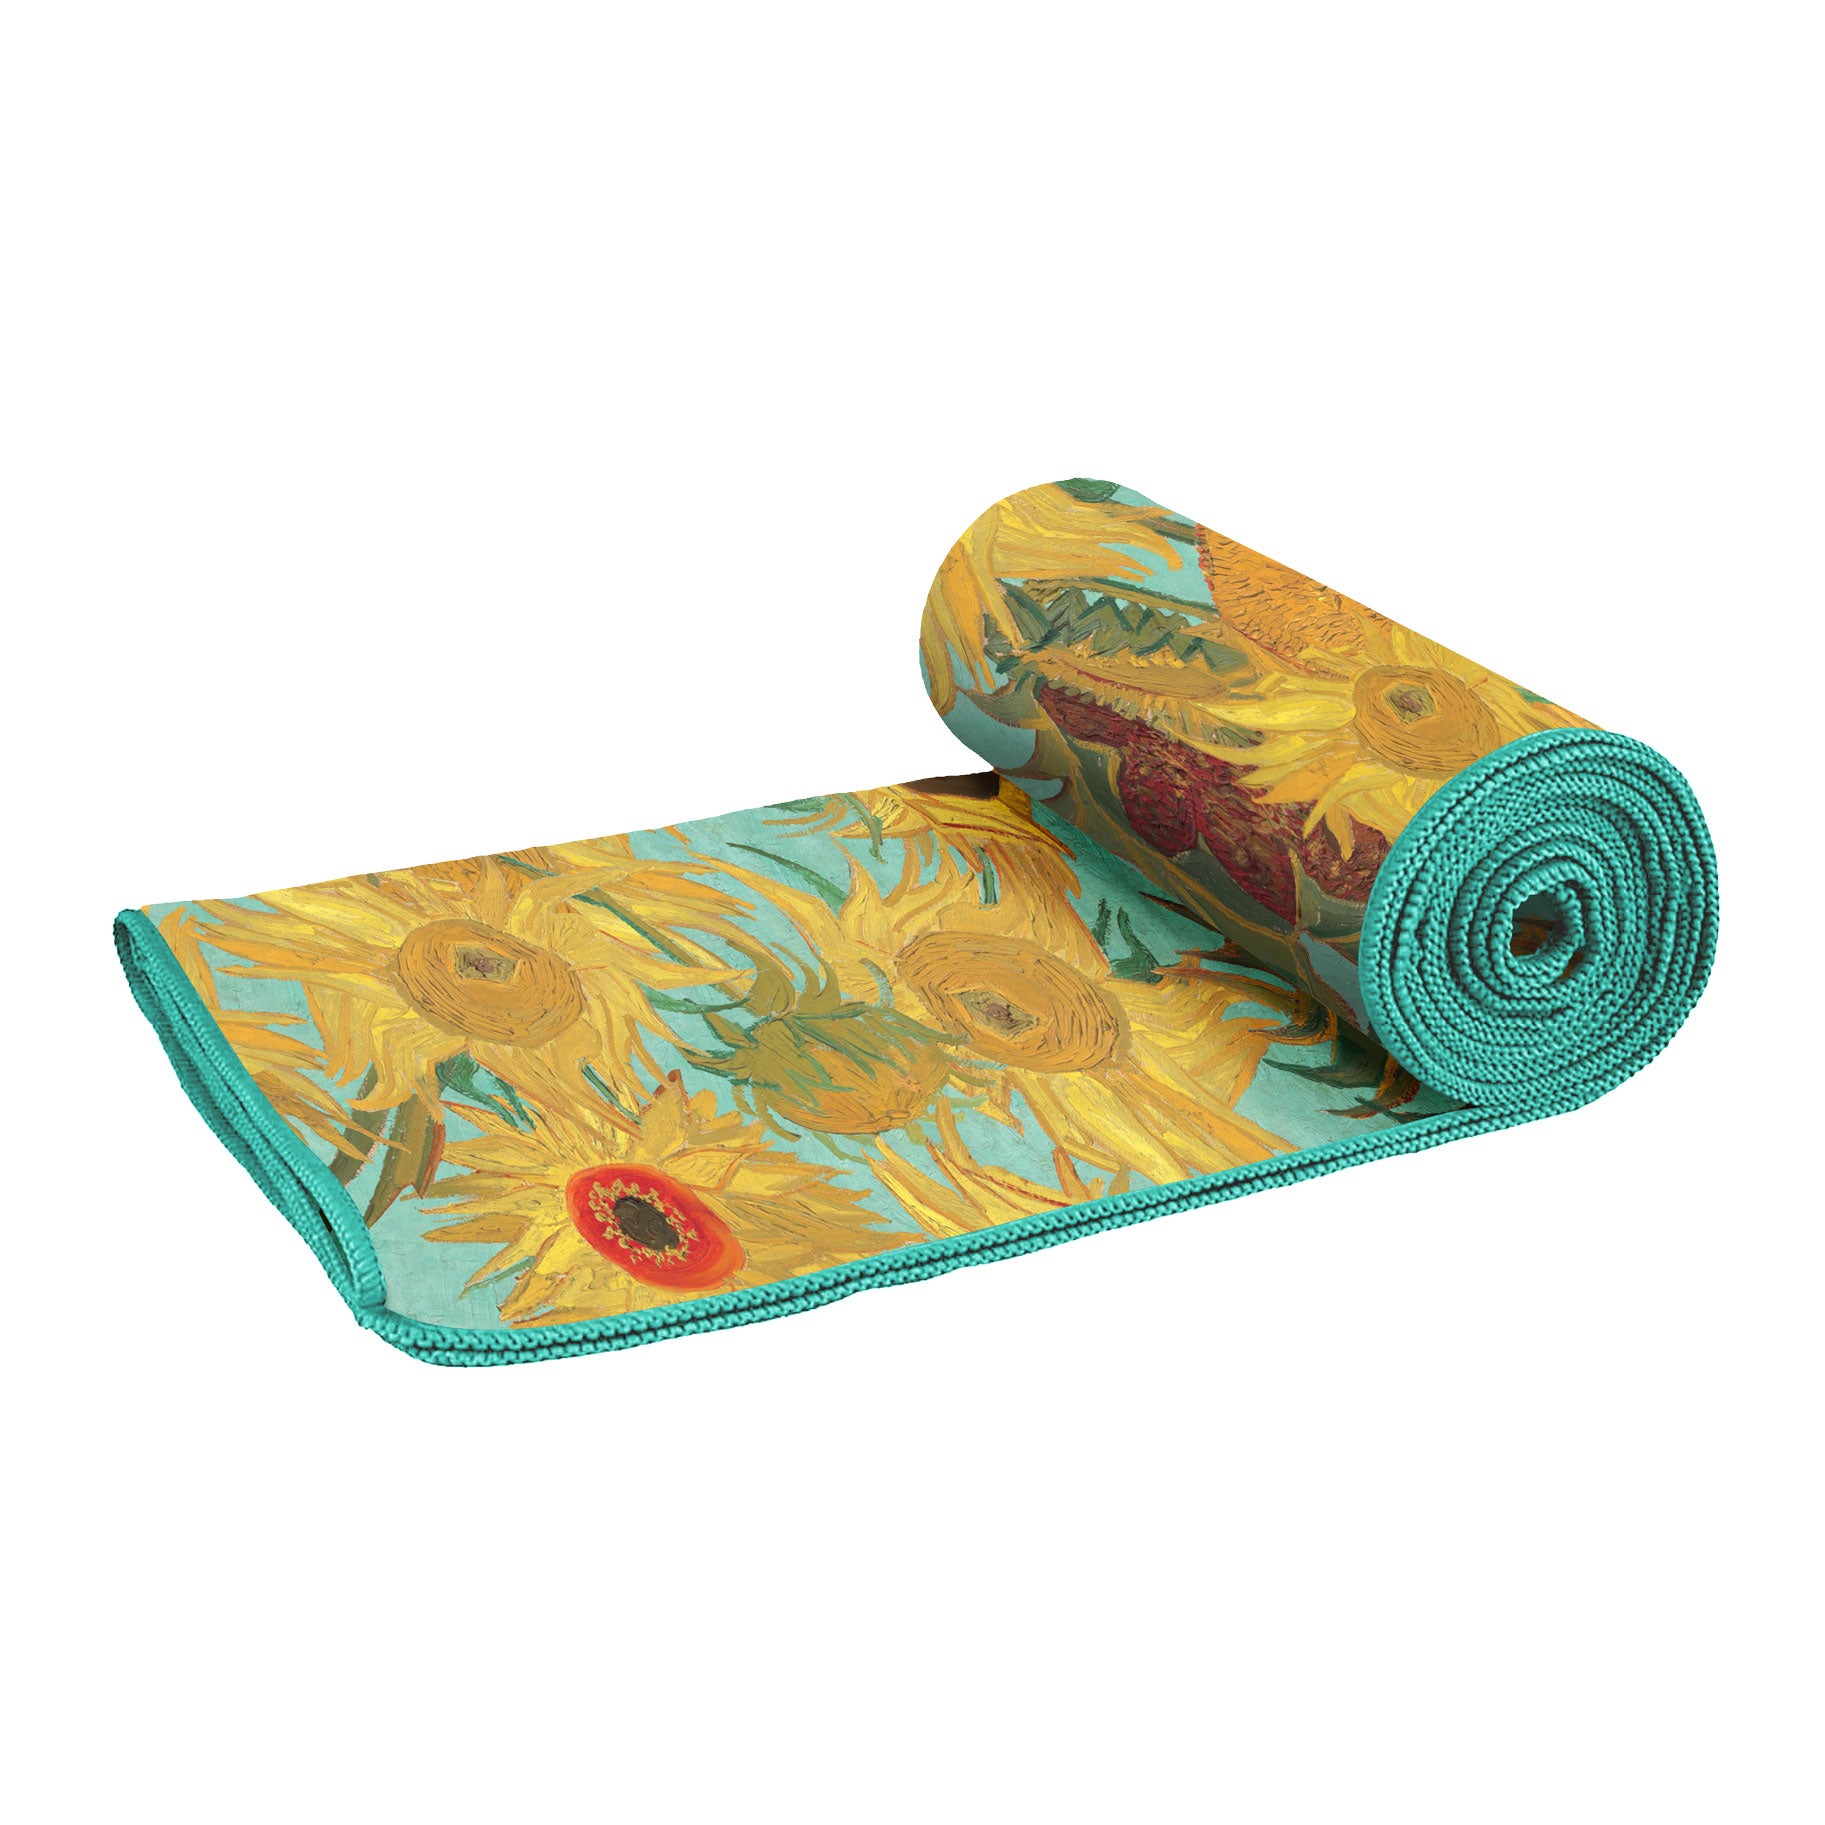 Oversized Beach Towel 40x63" - Microfiber, Quick-Dry, van Gogh Sunflowers